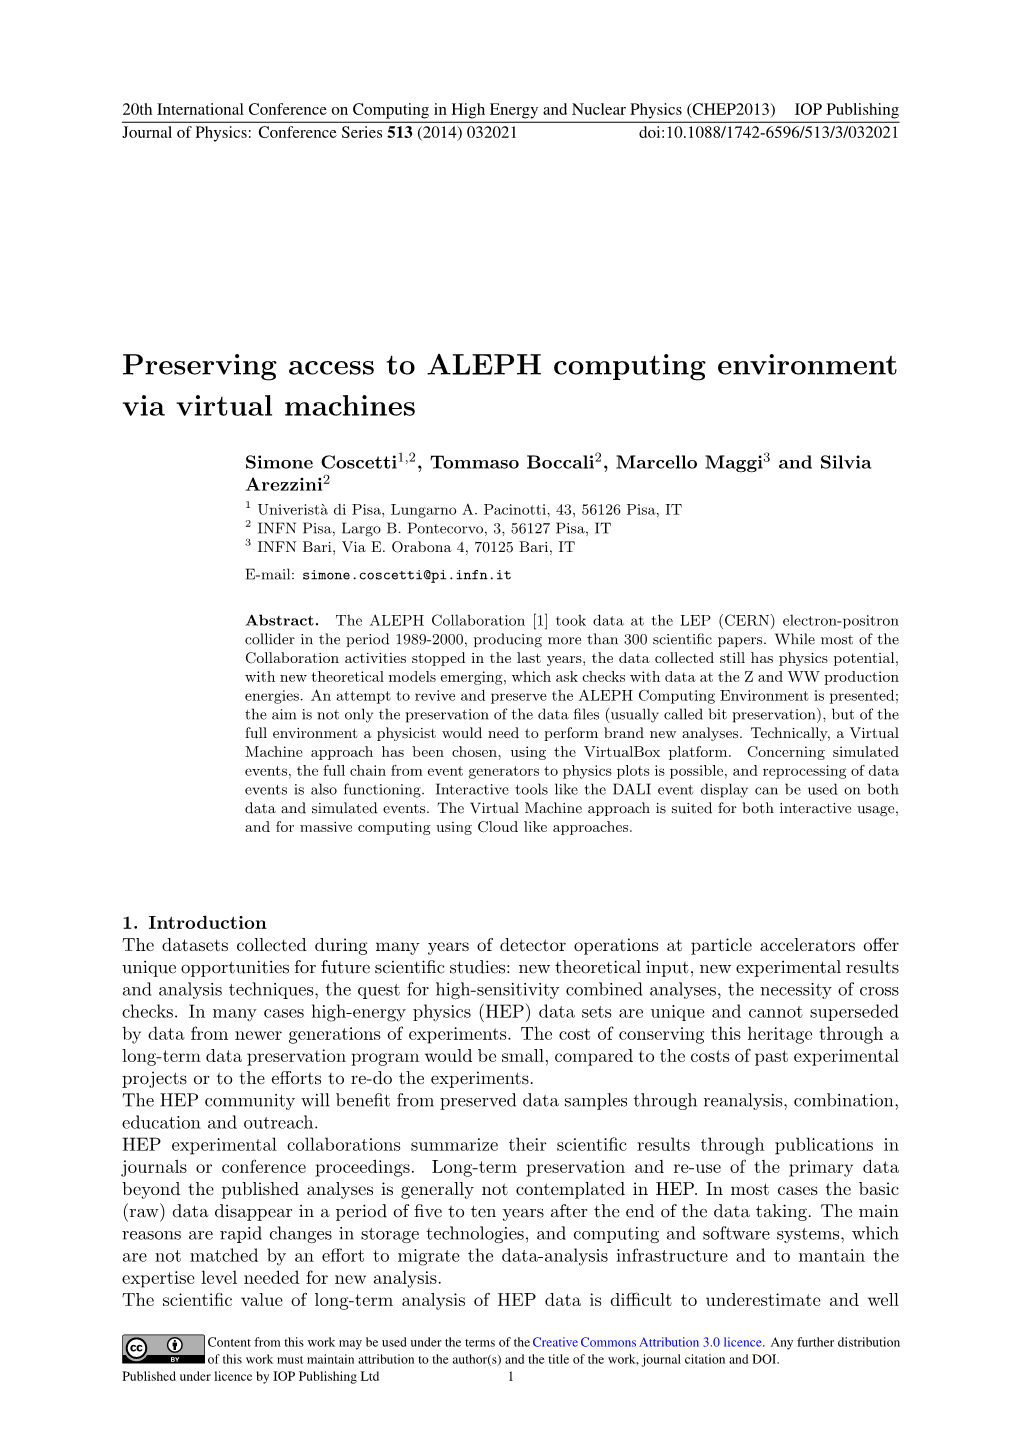 Preserving Access to ALEPH Computing Environment Via Virtual Machines